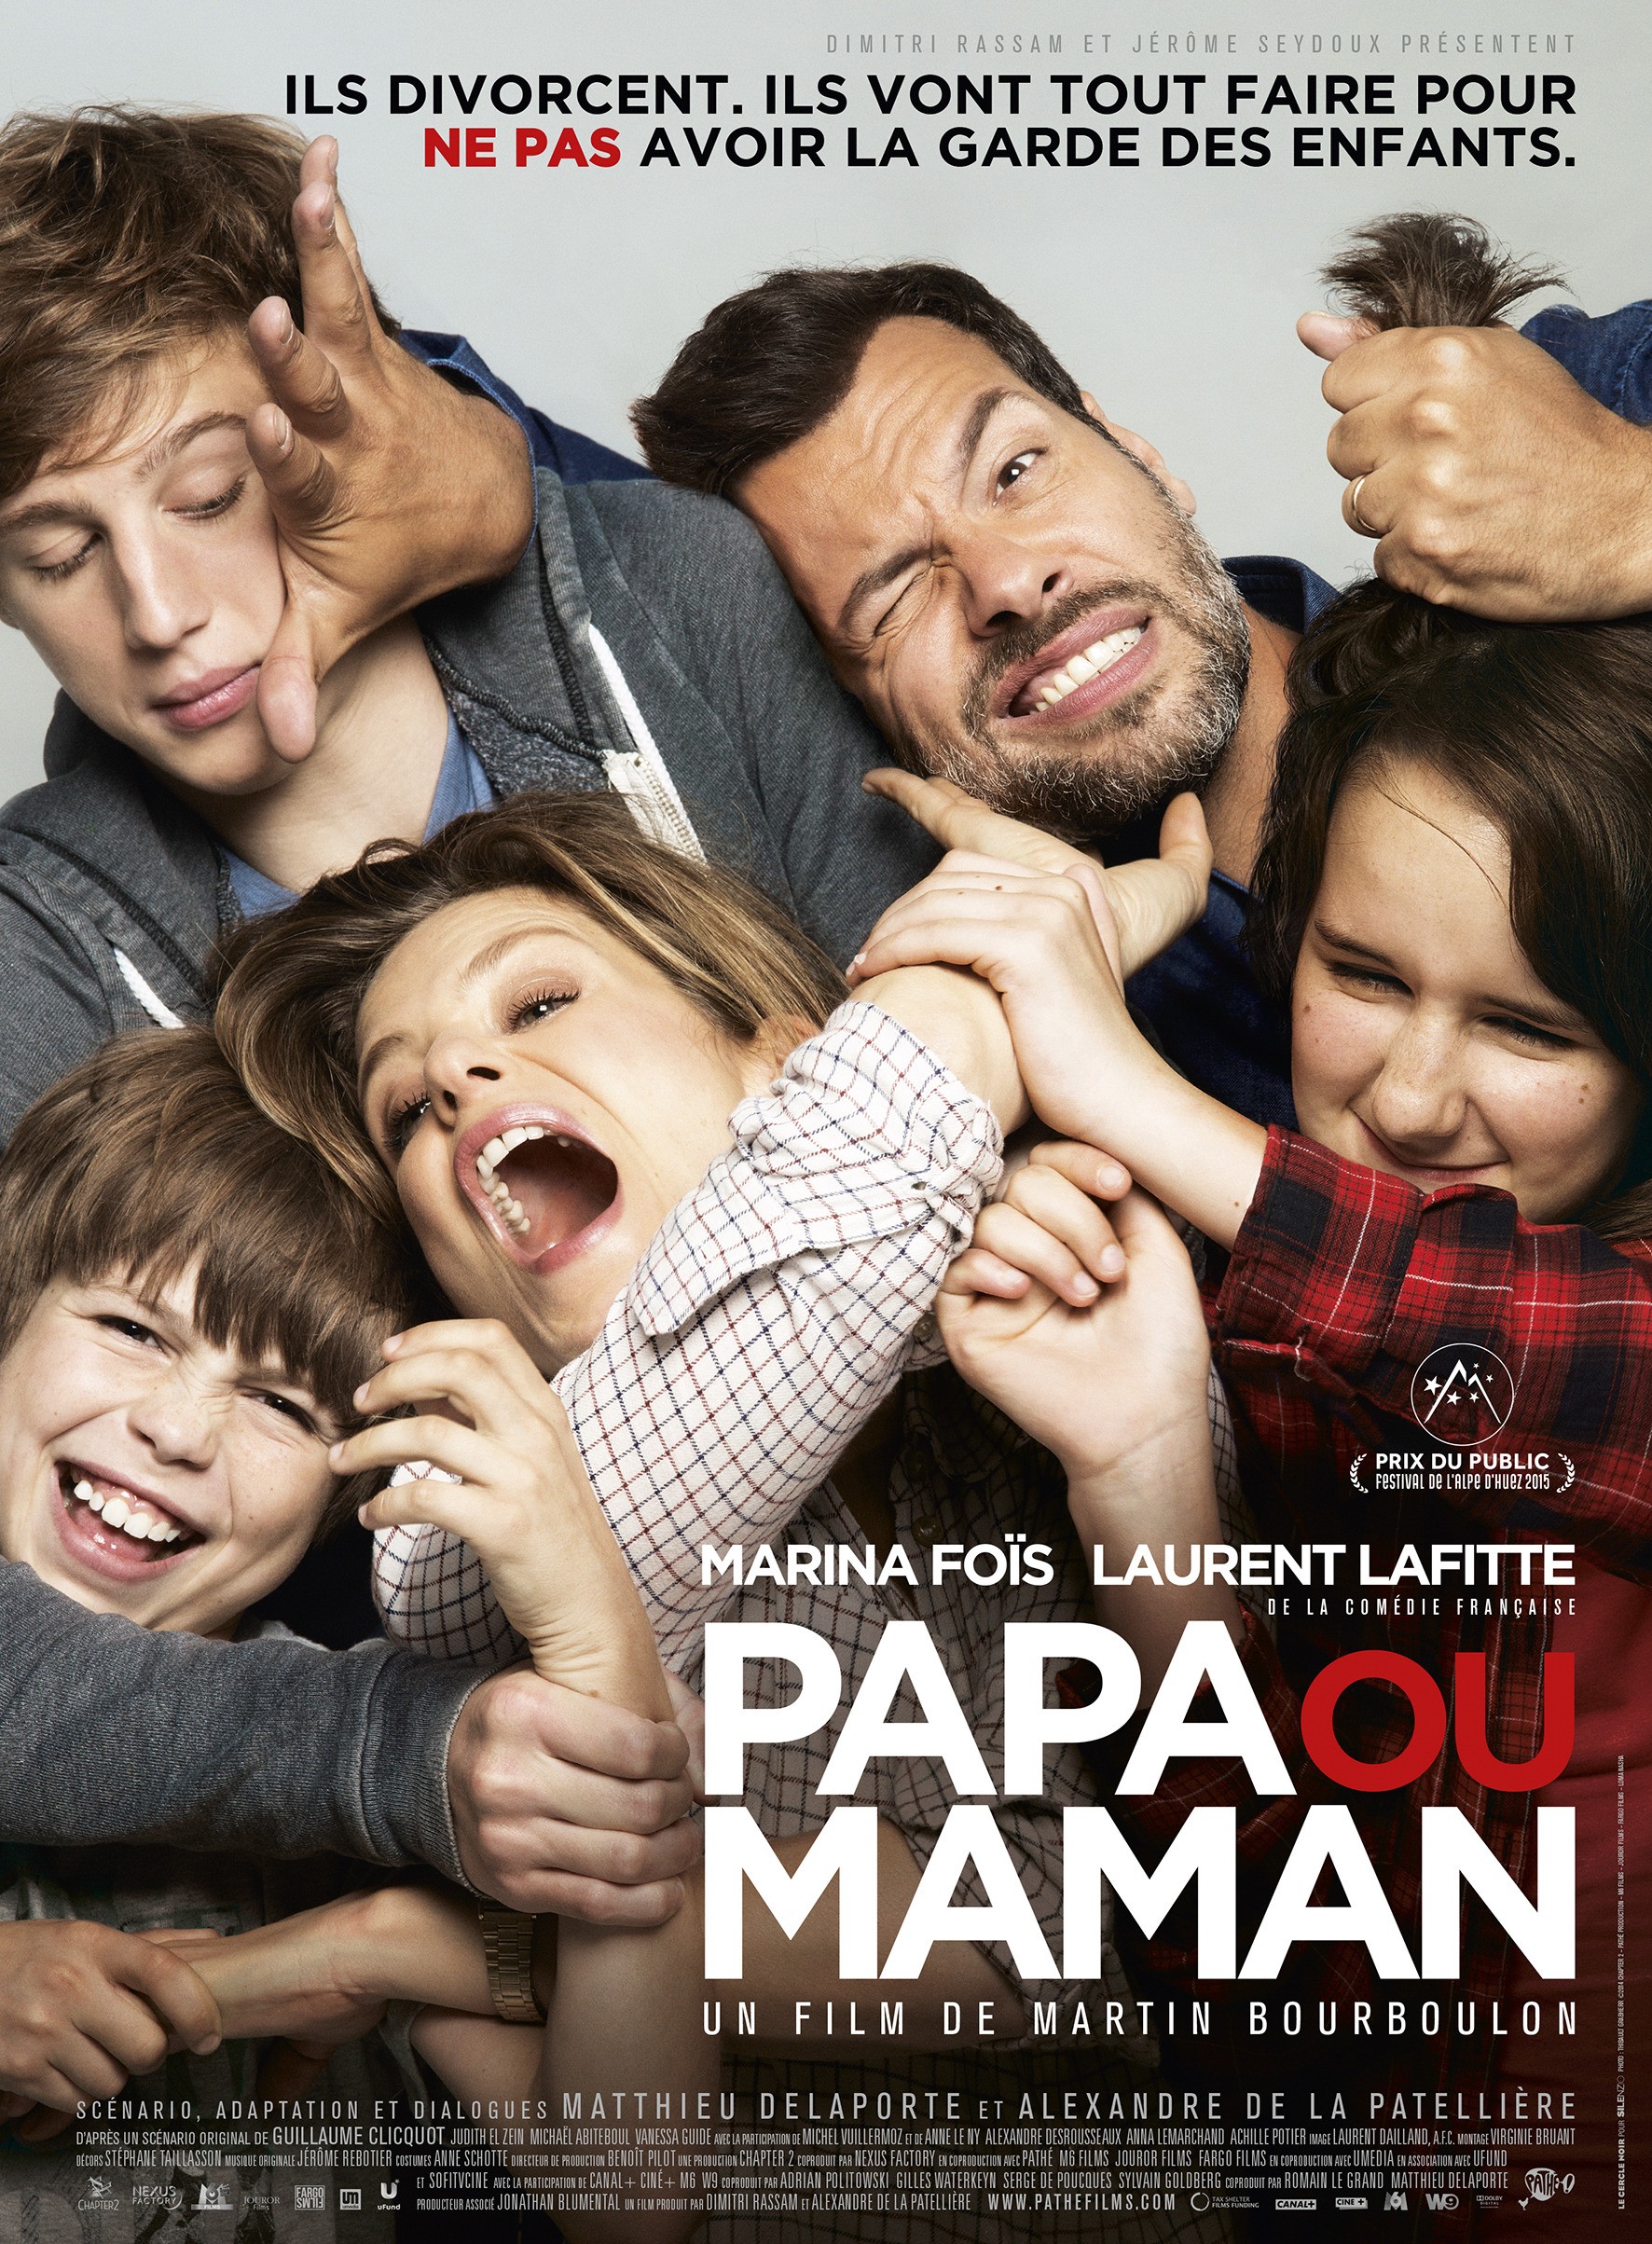 Mega Sized Movie Poster Image for Papa ou maman 